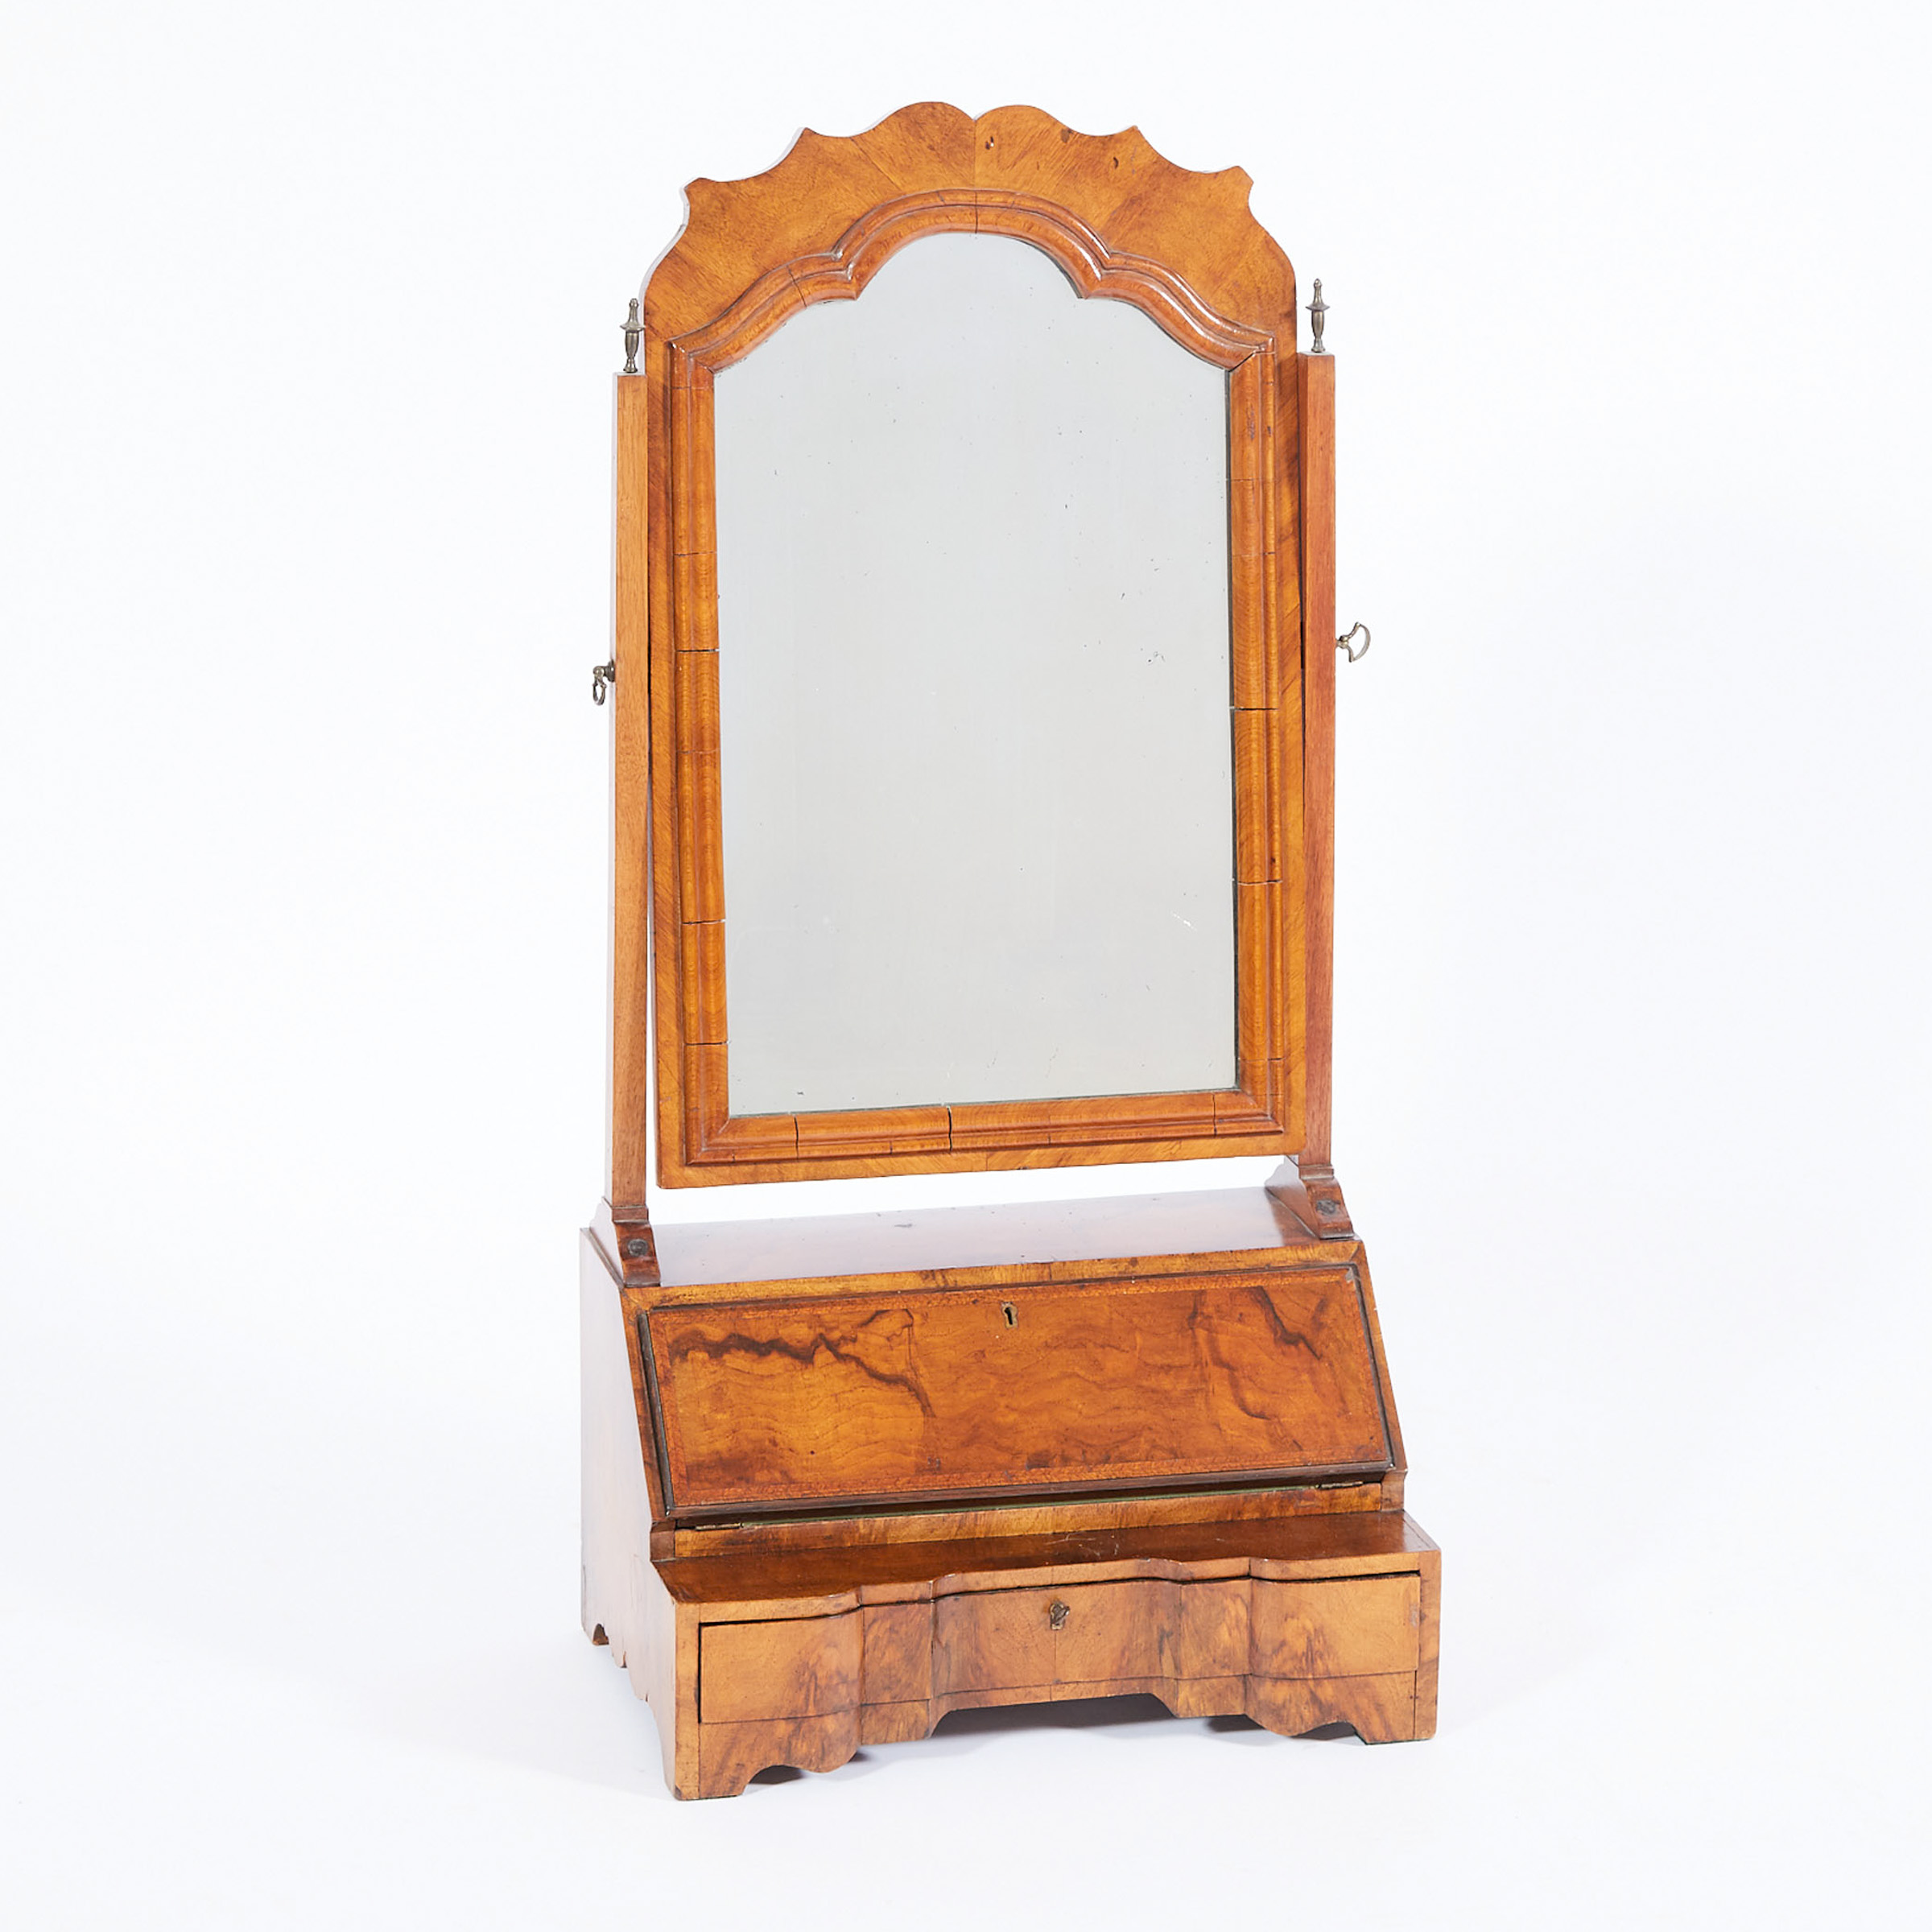 Queen Anne Figured Walnut Dressing Mirror, early 18th century